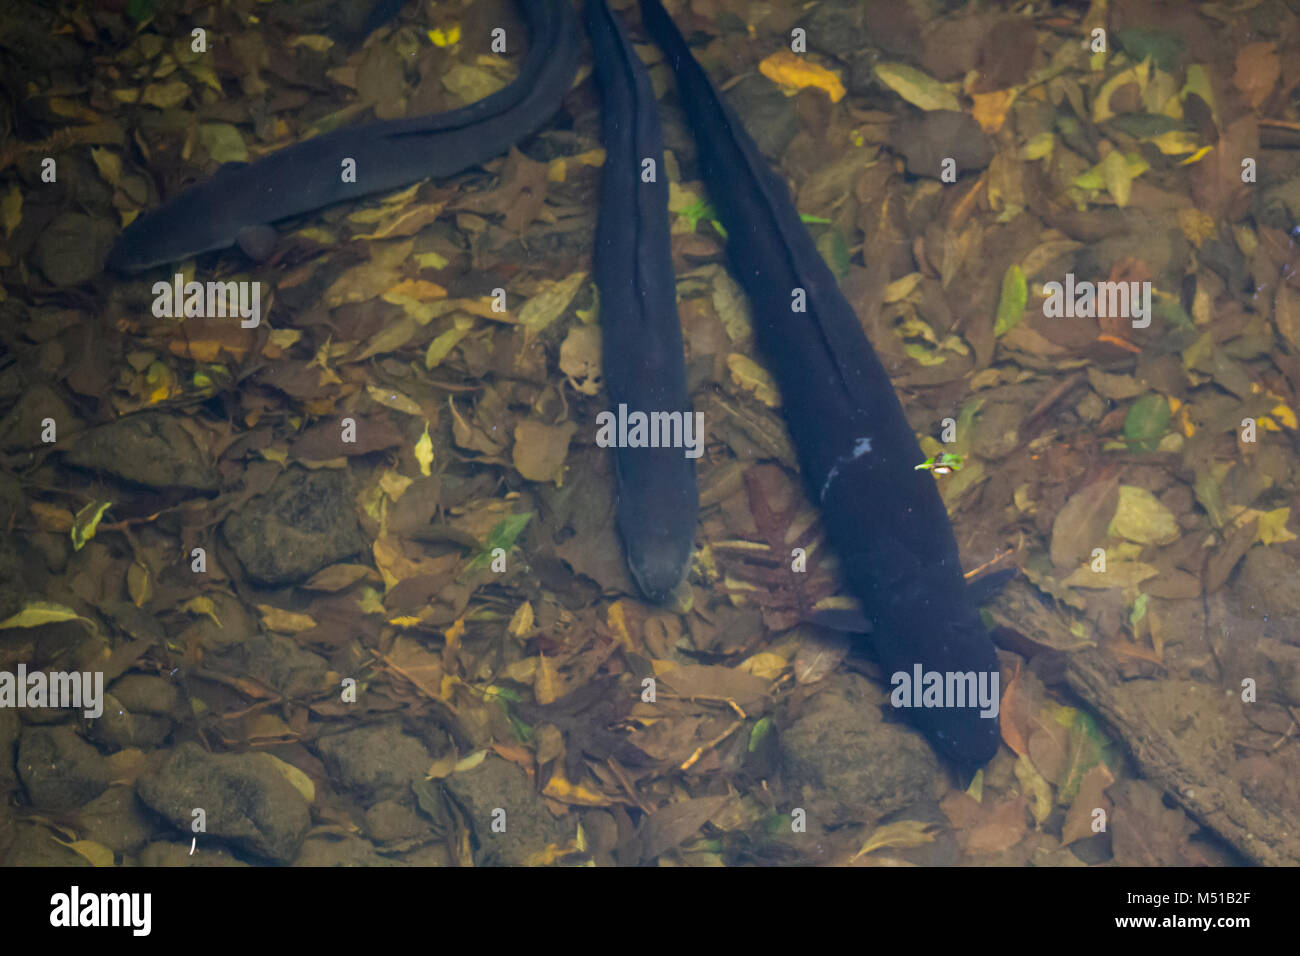 Longfin Eels in fresh water Stock Photo